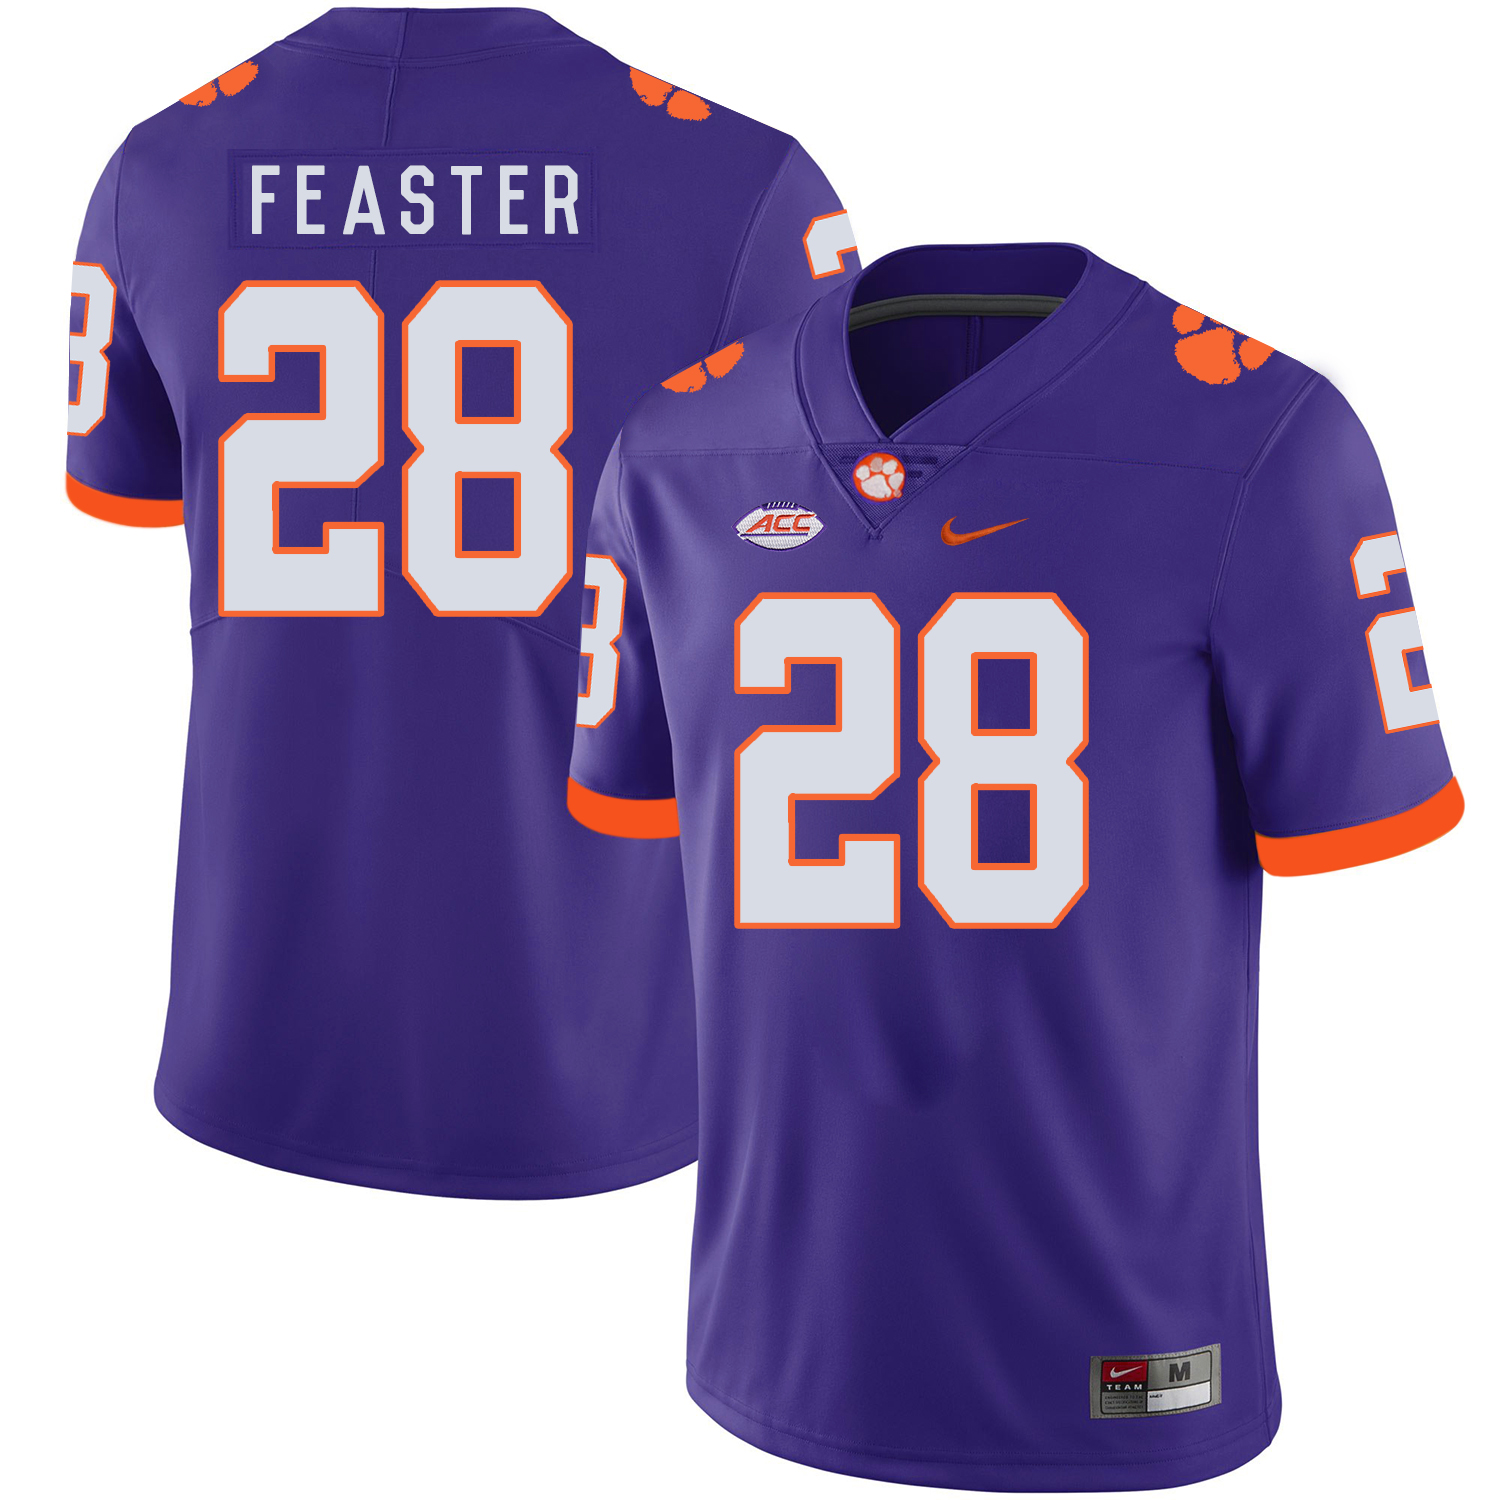 Clemson Tigers 28 Tavien Feaster Purple Nike College Football Jersey